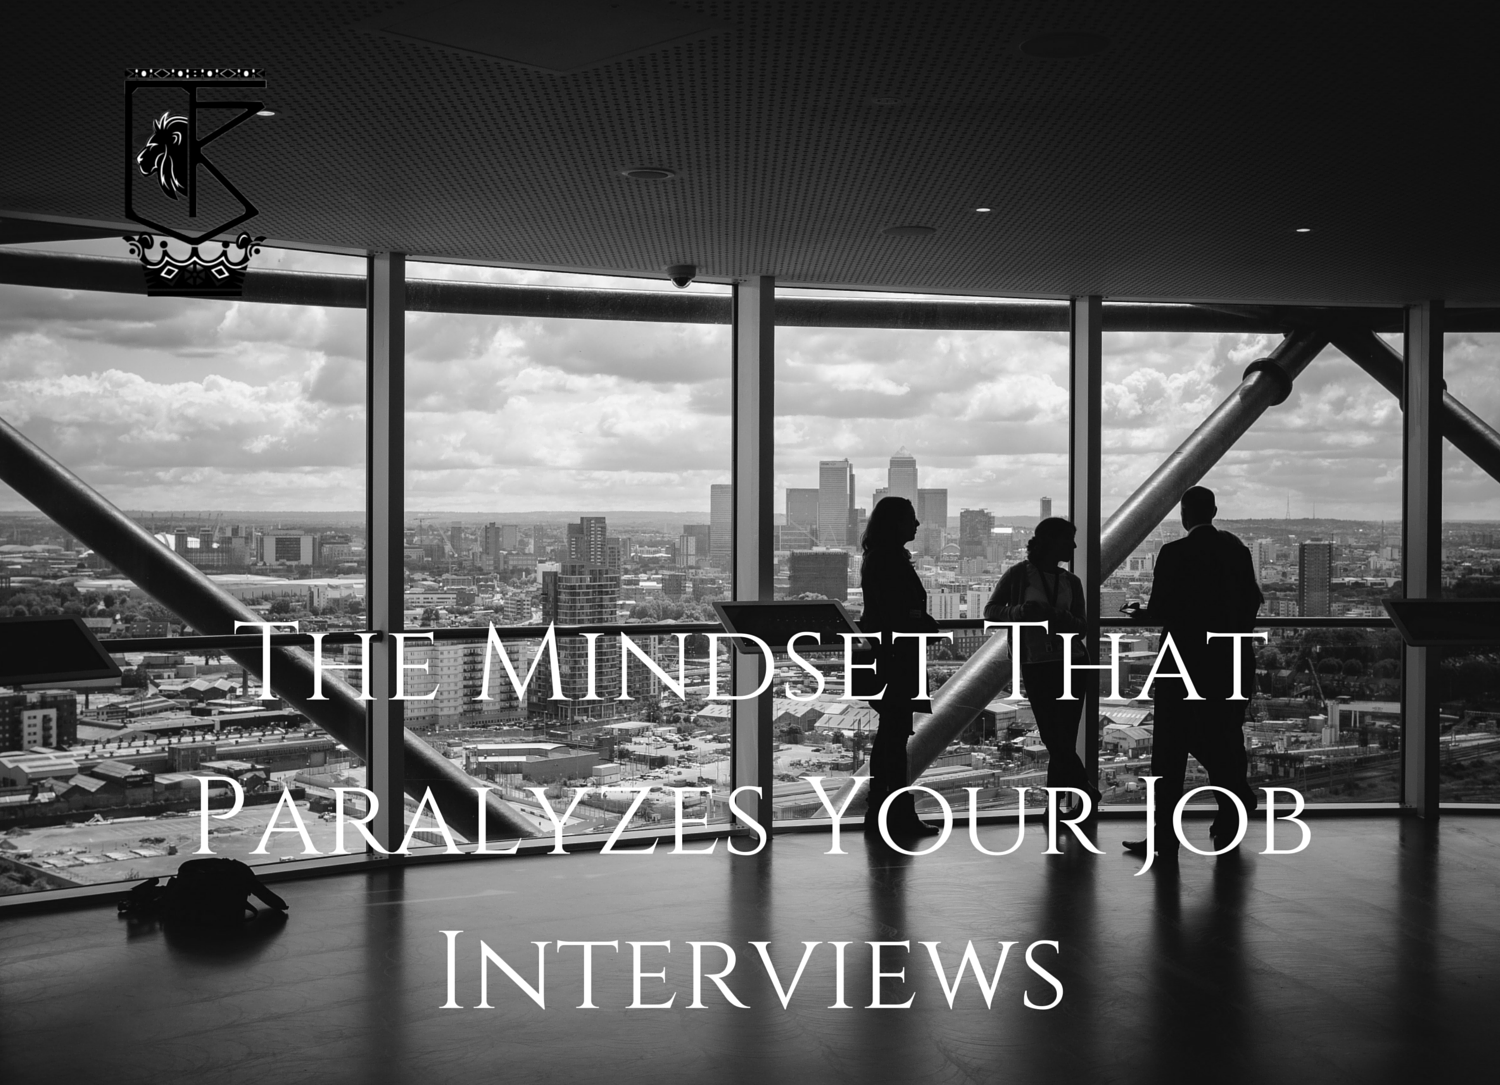 The Mindset That Paralyzes Your Job Interviews